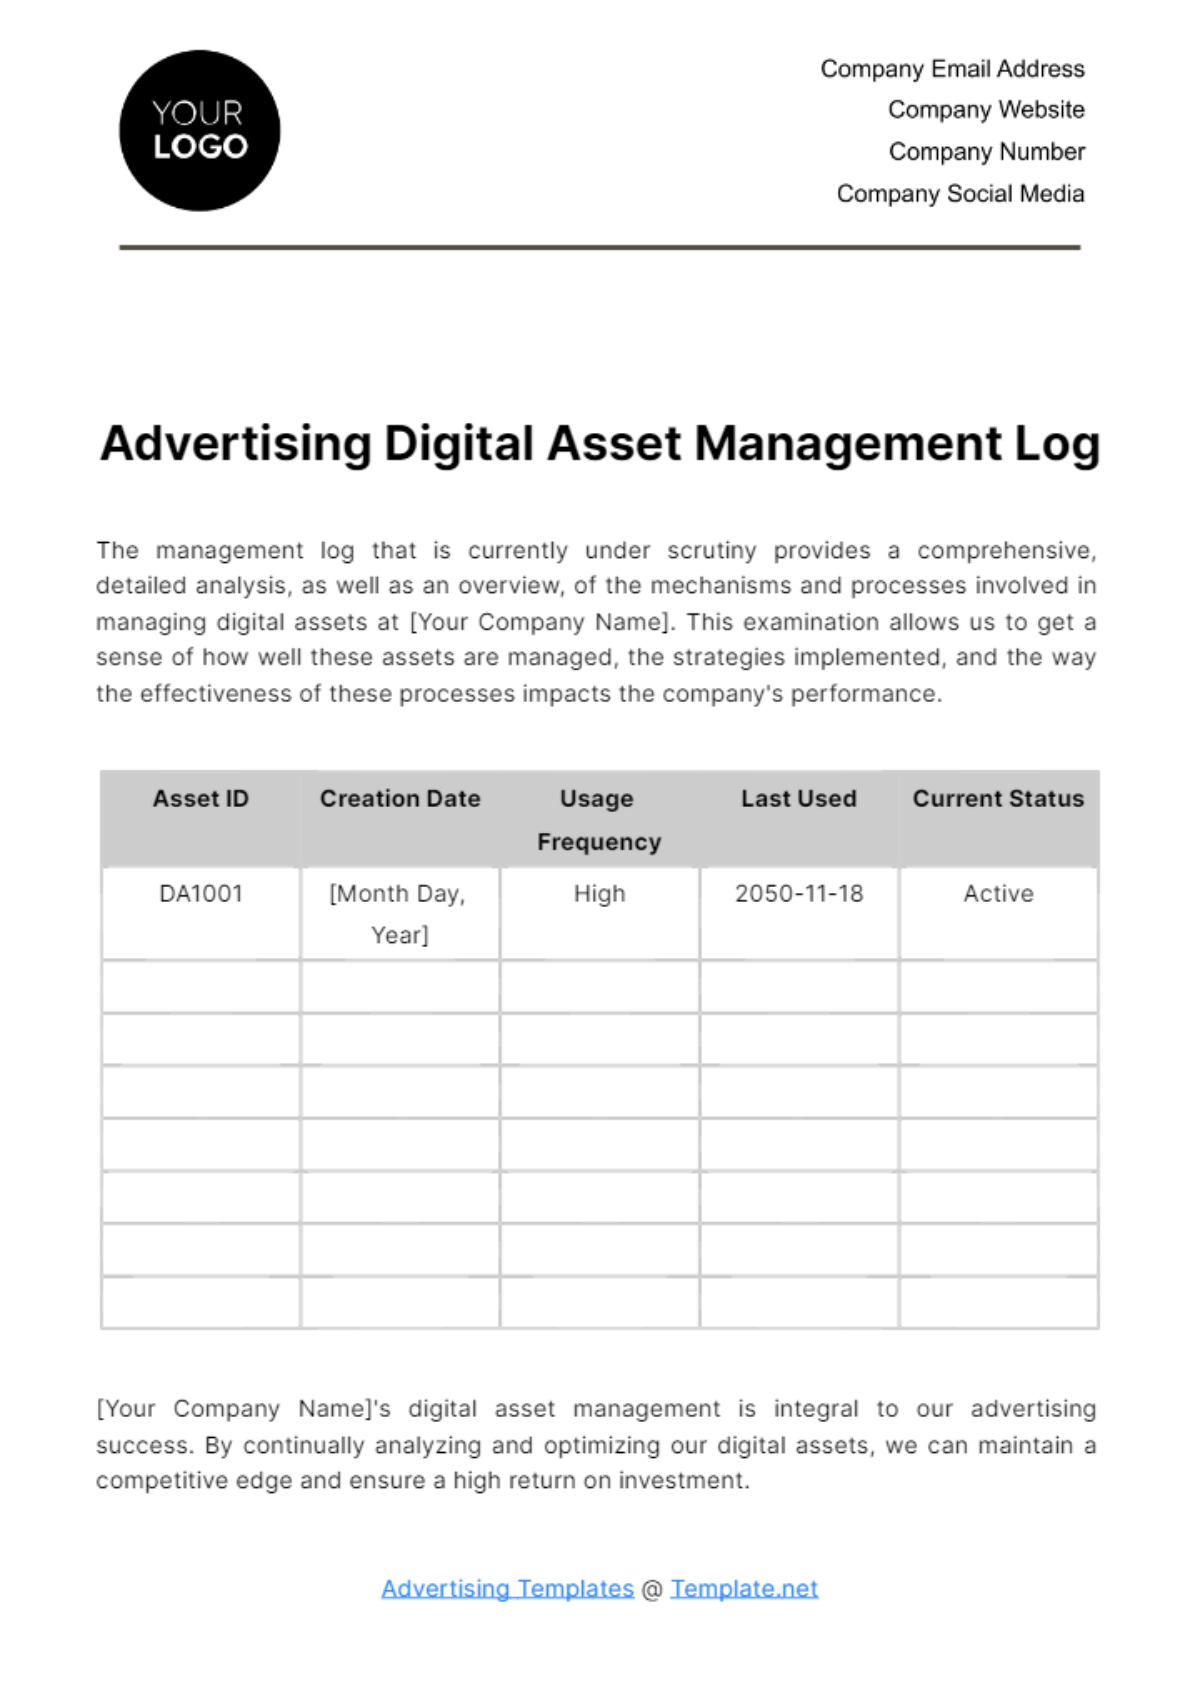 Free Advertising Digital Asset Management Log Template